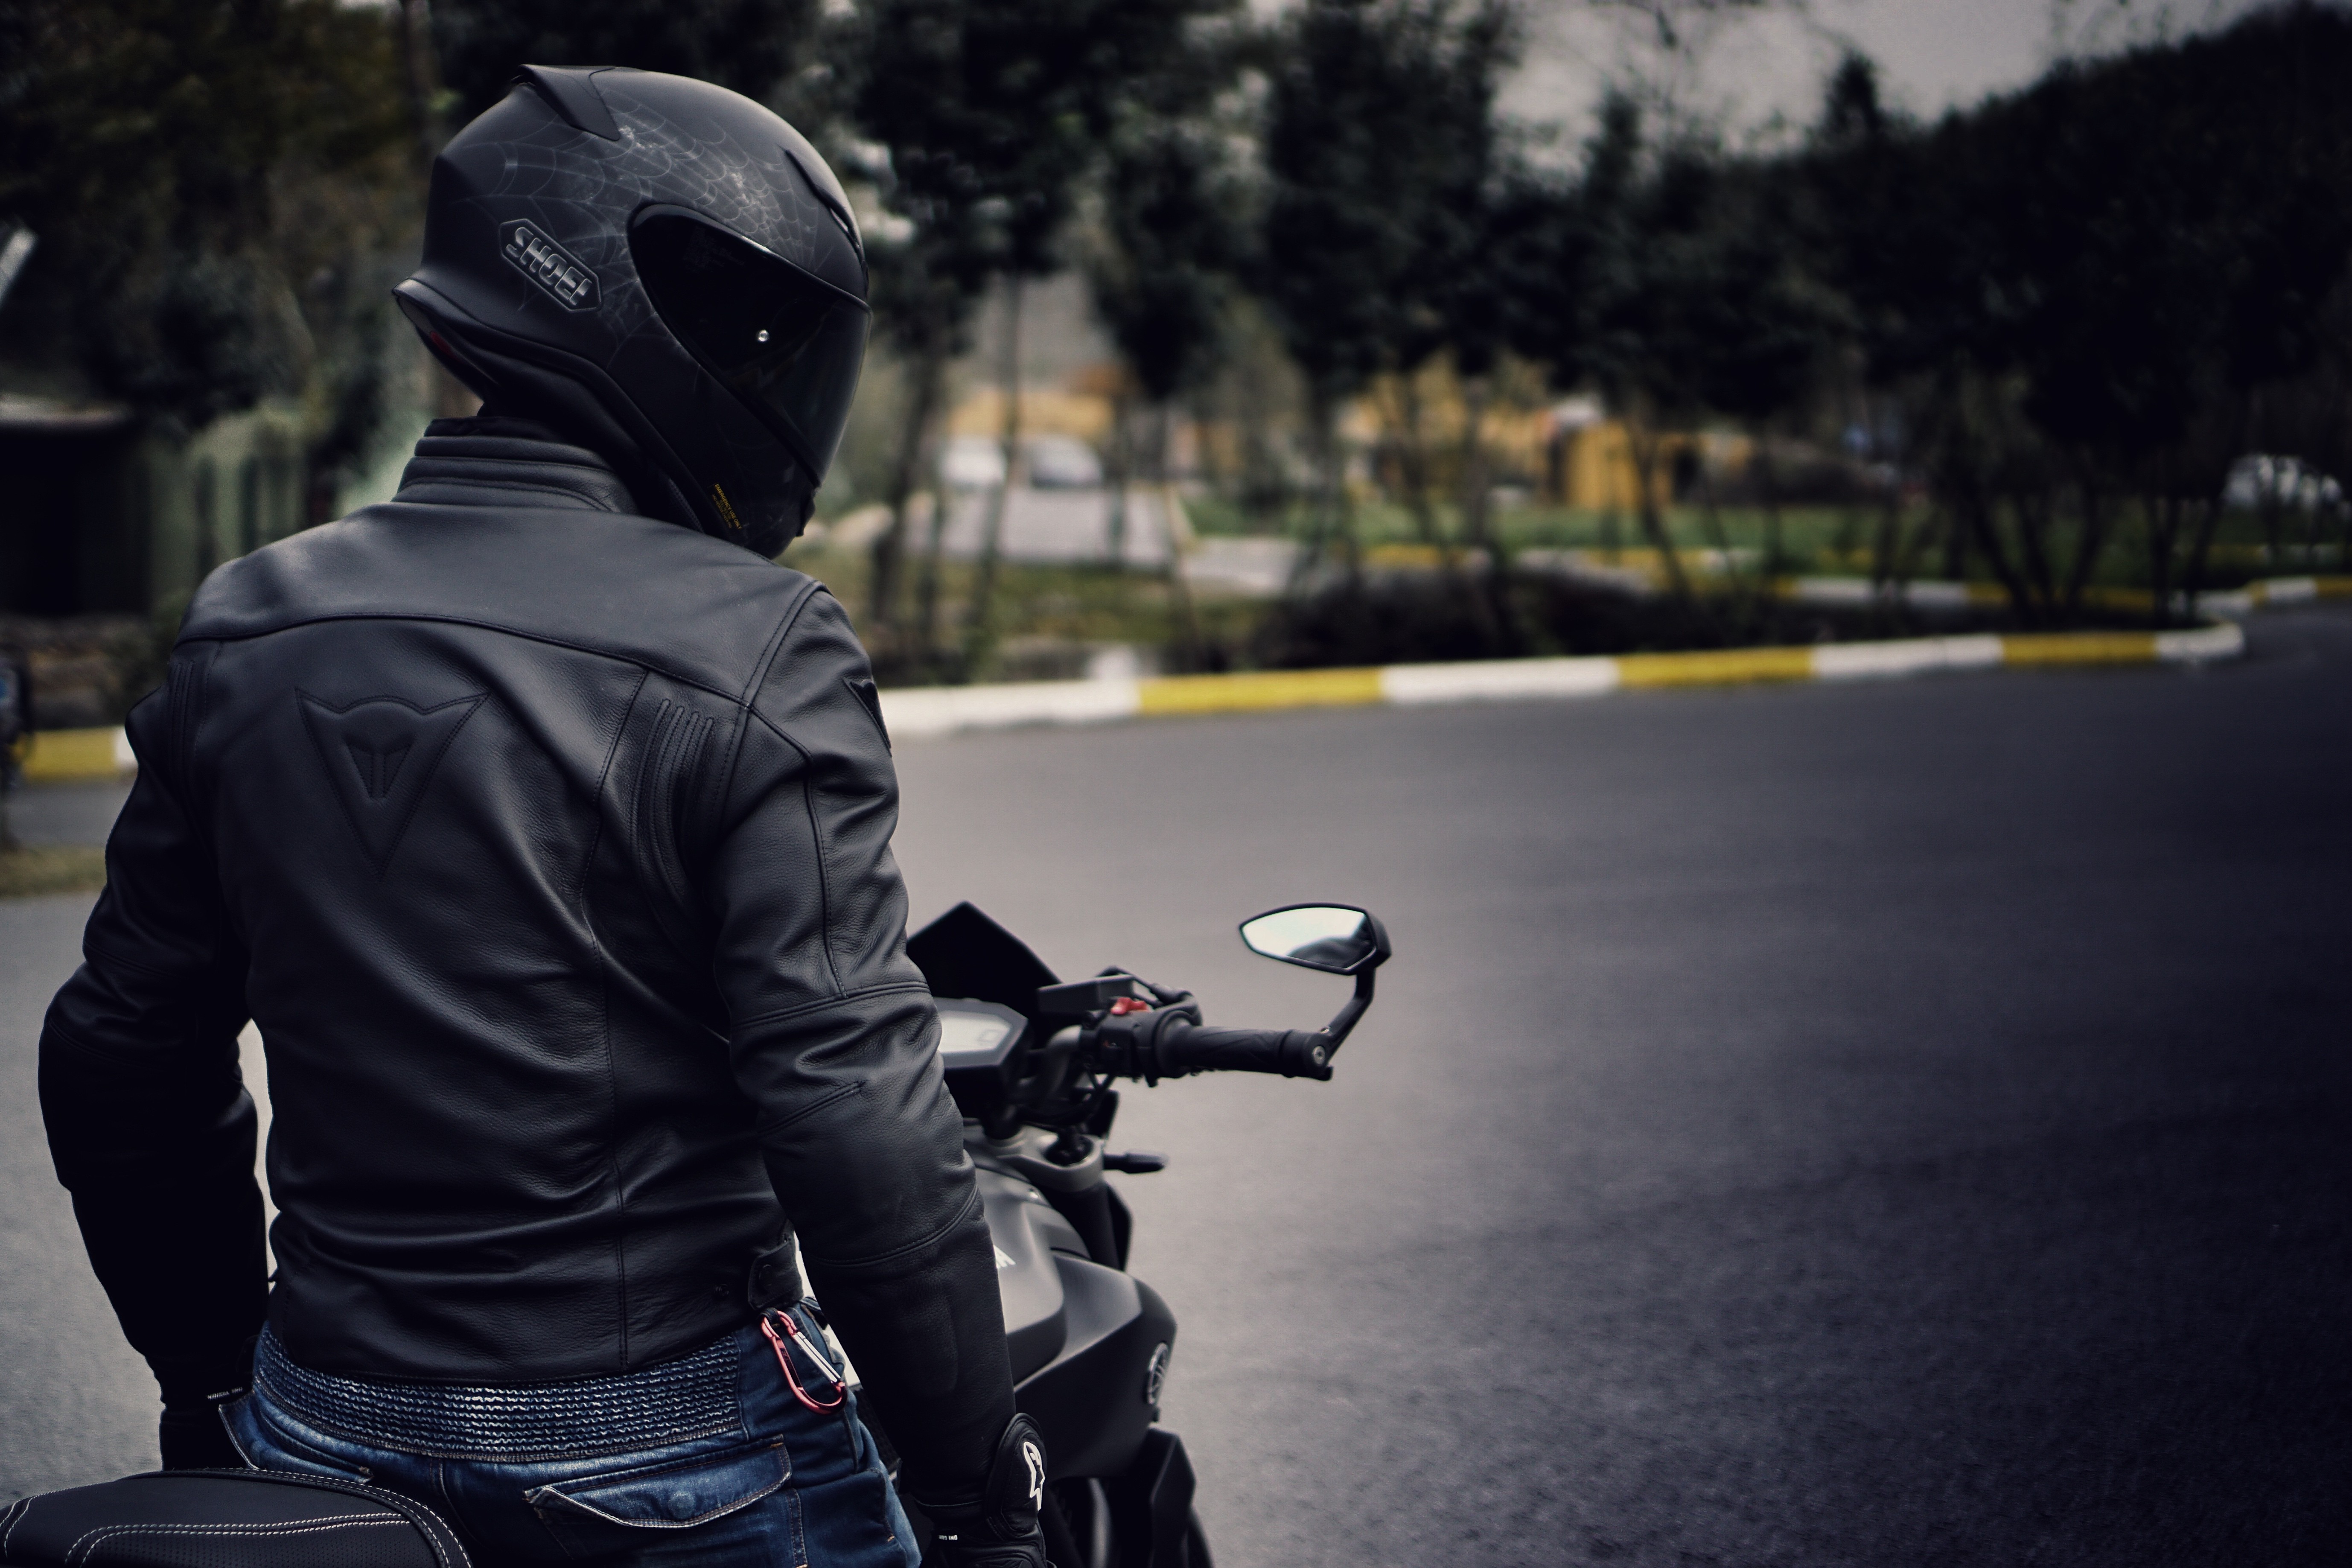 #dainese, #shoei, #motorcycle, #yamaha, Wallpaper - Мотоциклист Фото На Обои , HD Wallpaper & Backgrounds